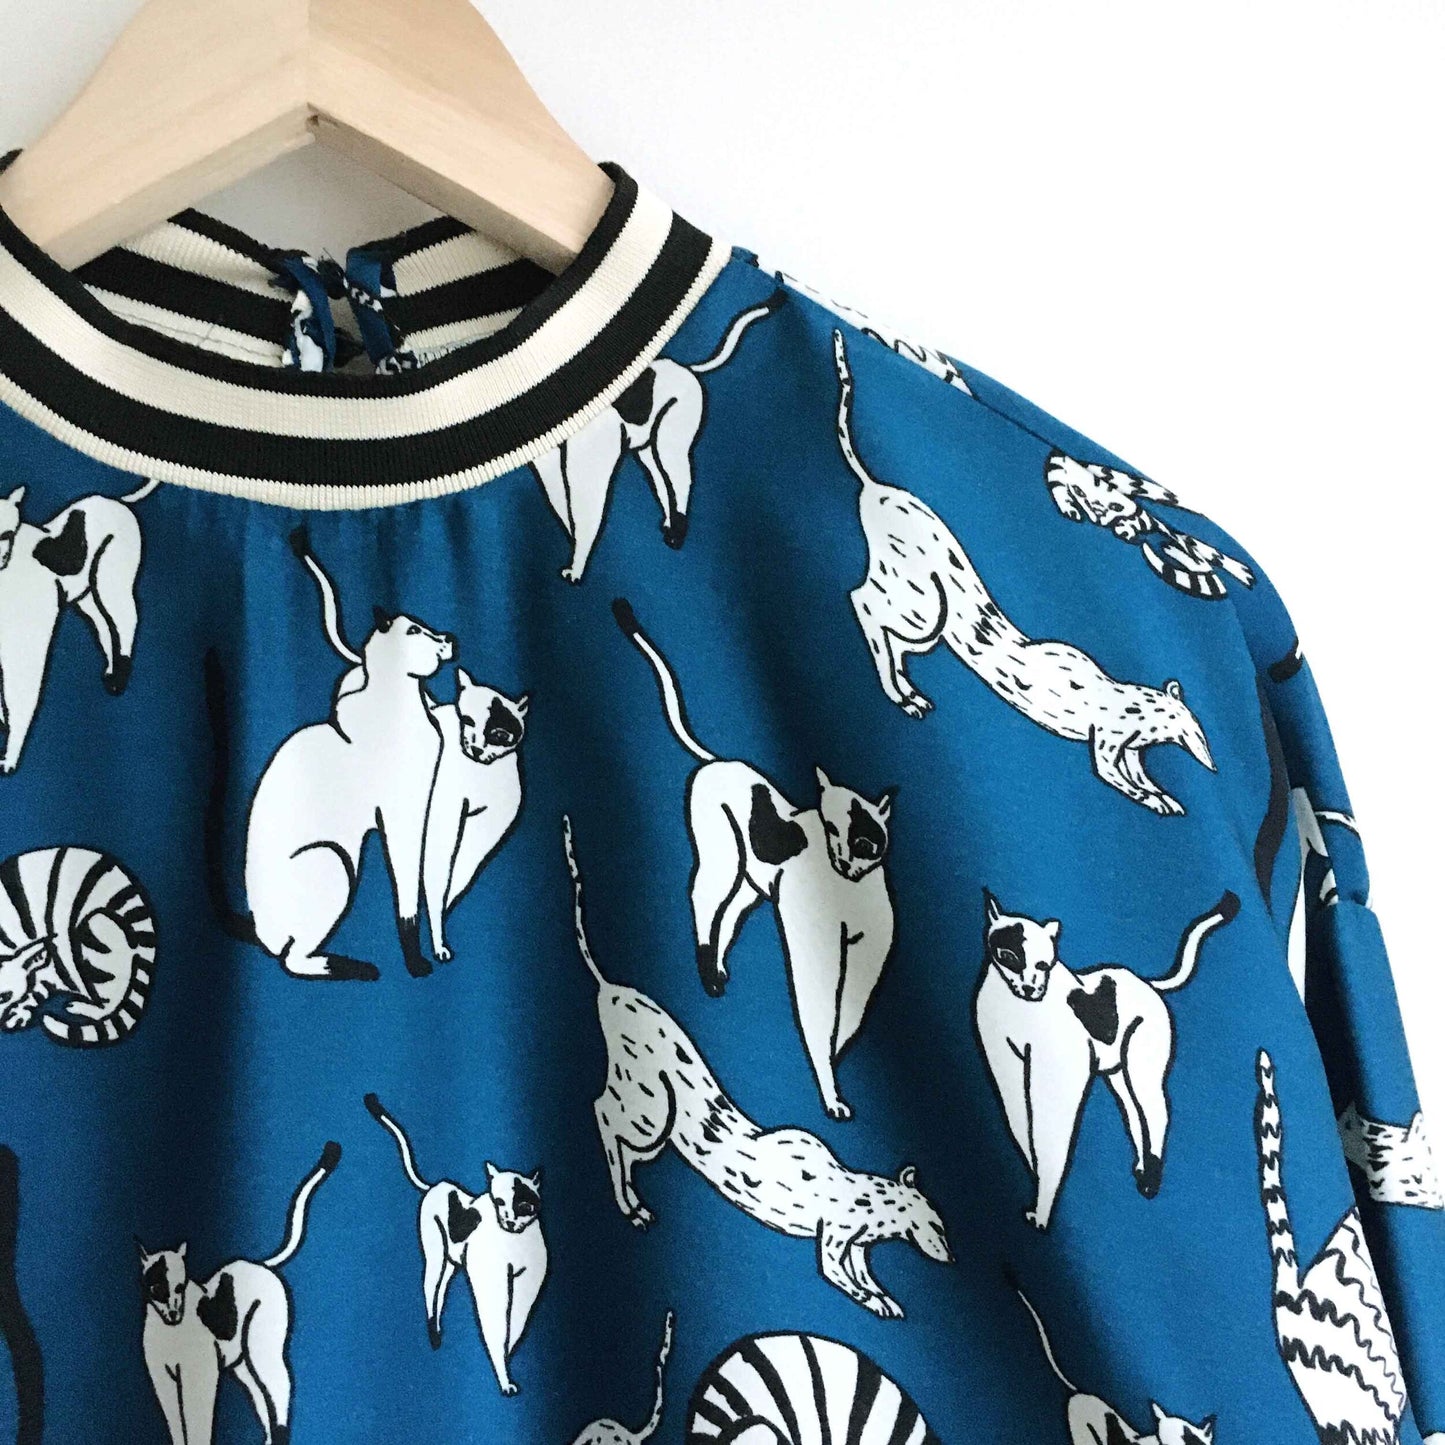 Zara printed cat blouse with knit trim - size Medium